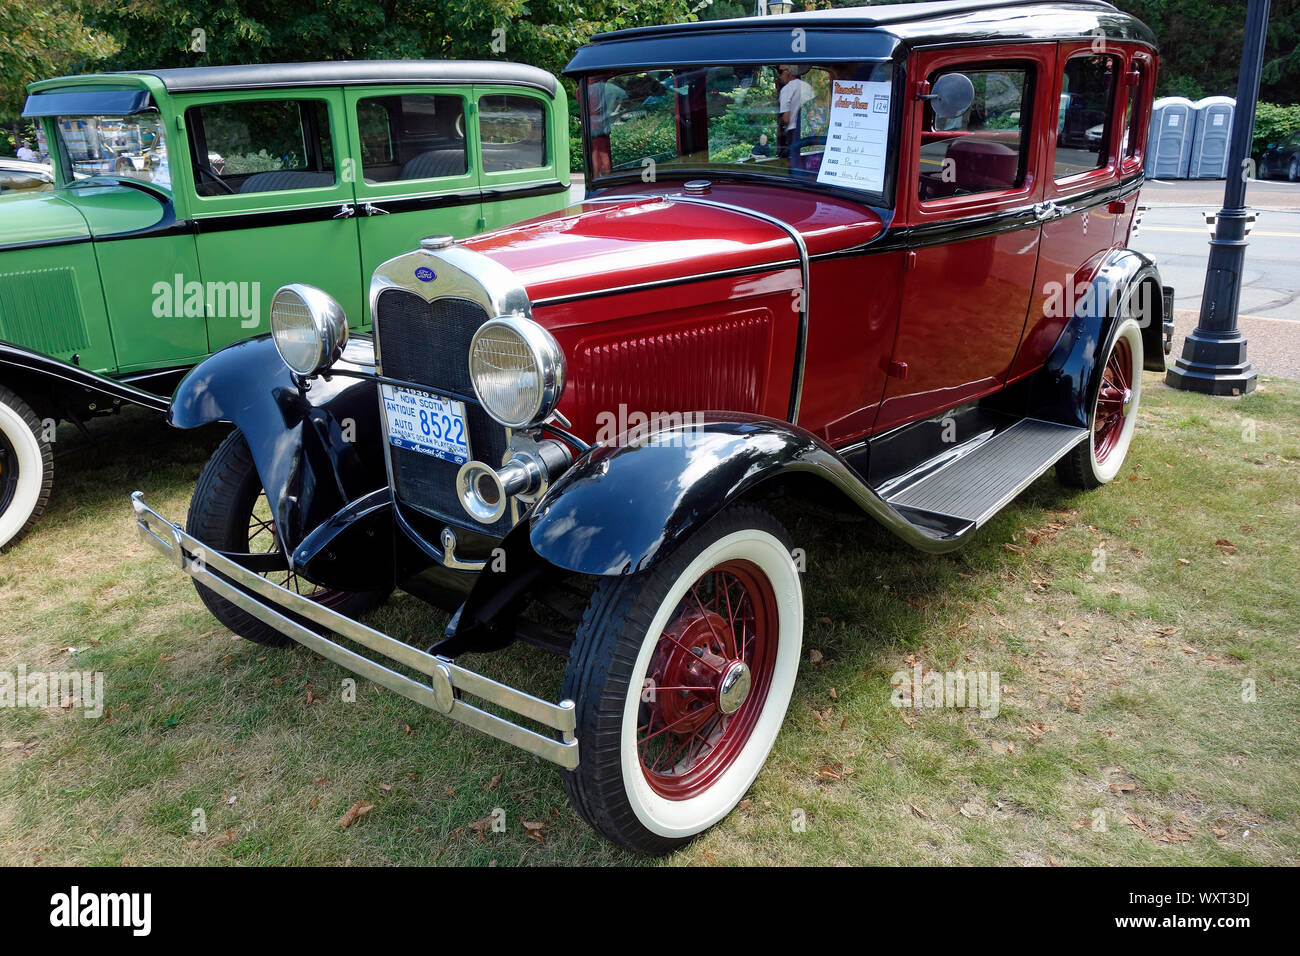 1930 Ford model A car Stockfotografie - Alamy